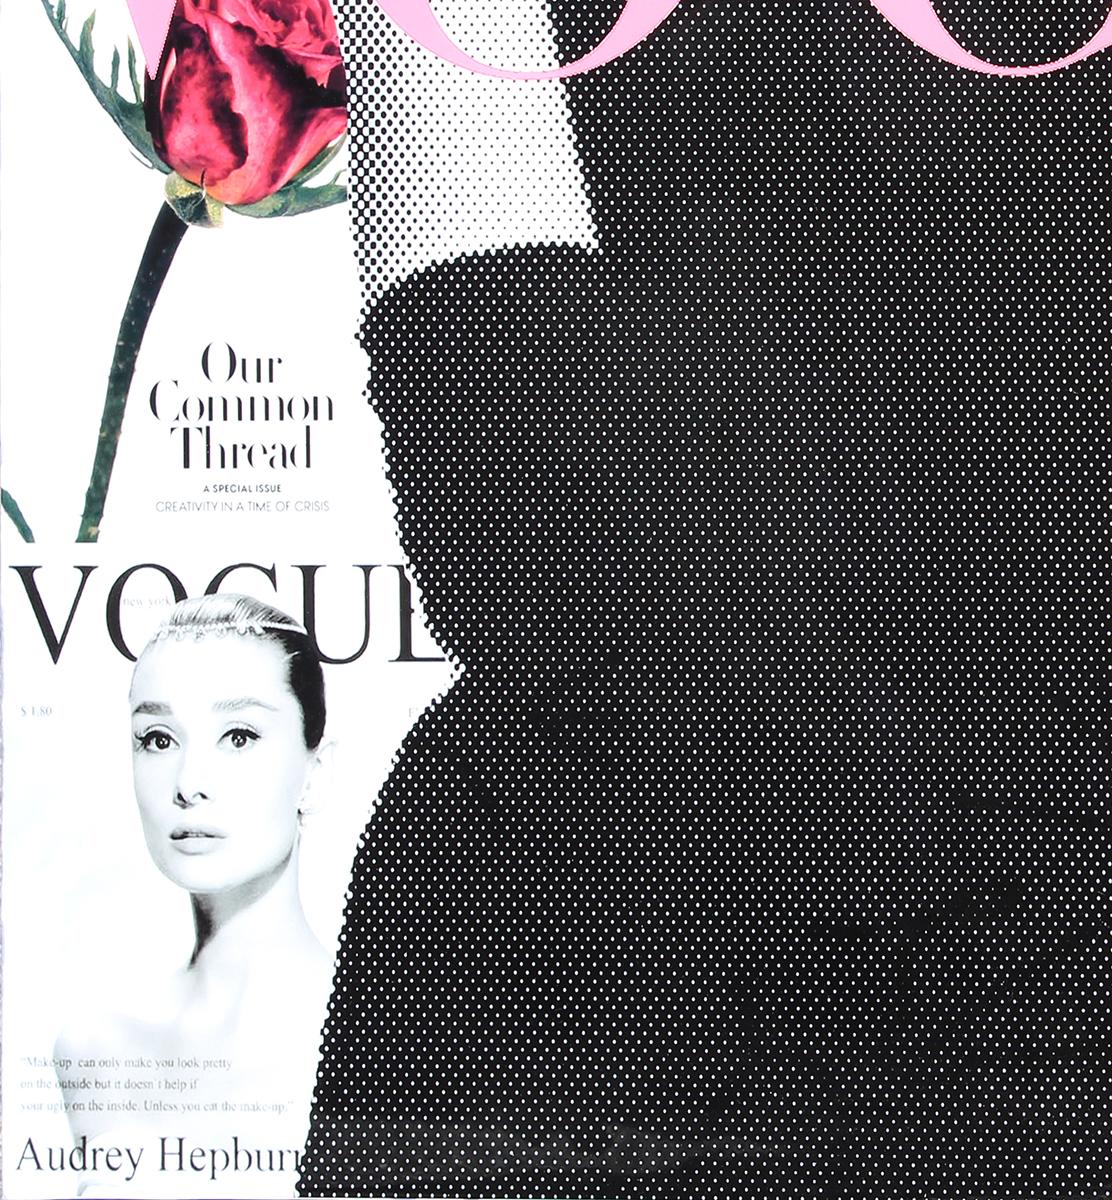 Audrey in Vogue Style Colorful Pop Art Resin Collage Audrey Hepburn Portrait 4